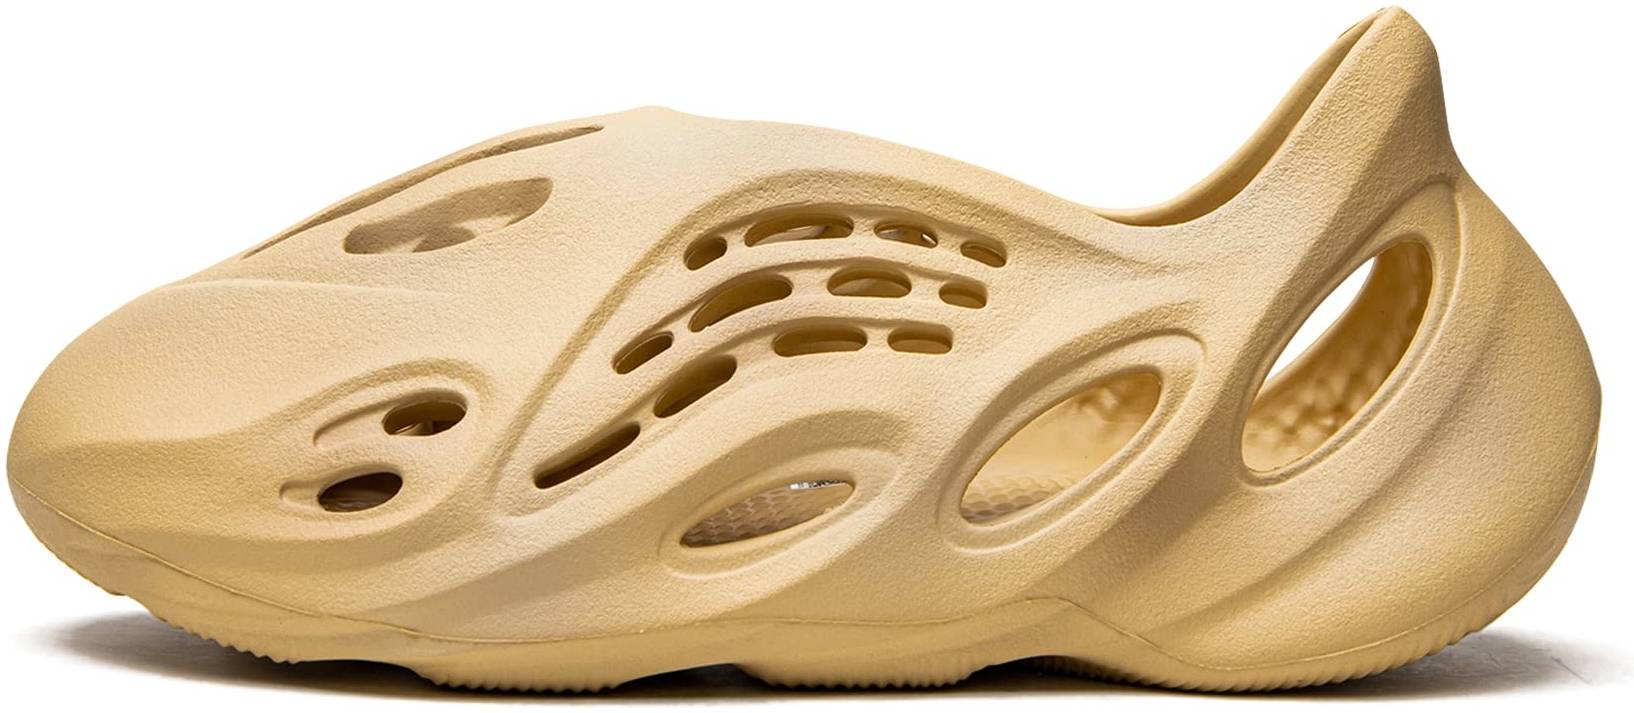 Adidas YEEZY Foam Runner ONYX REVIEW & On Feet 